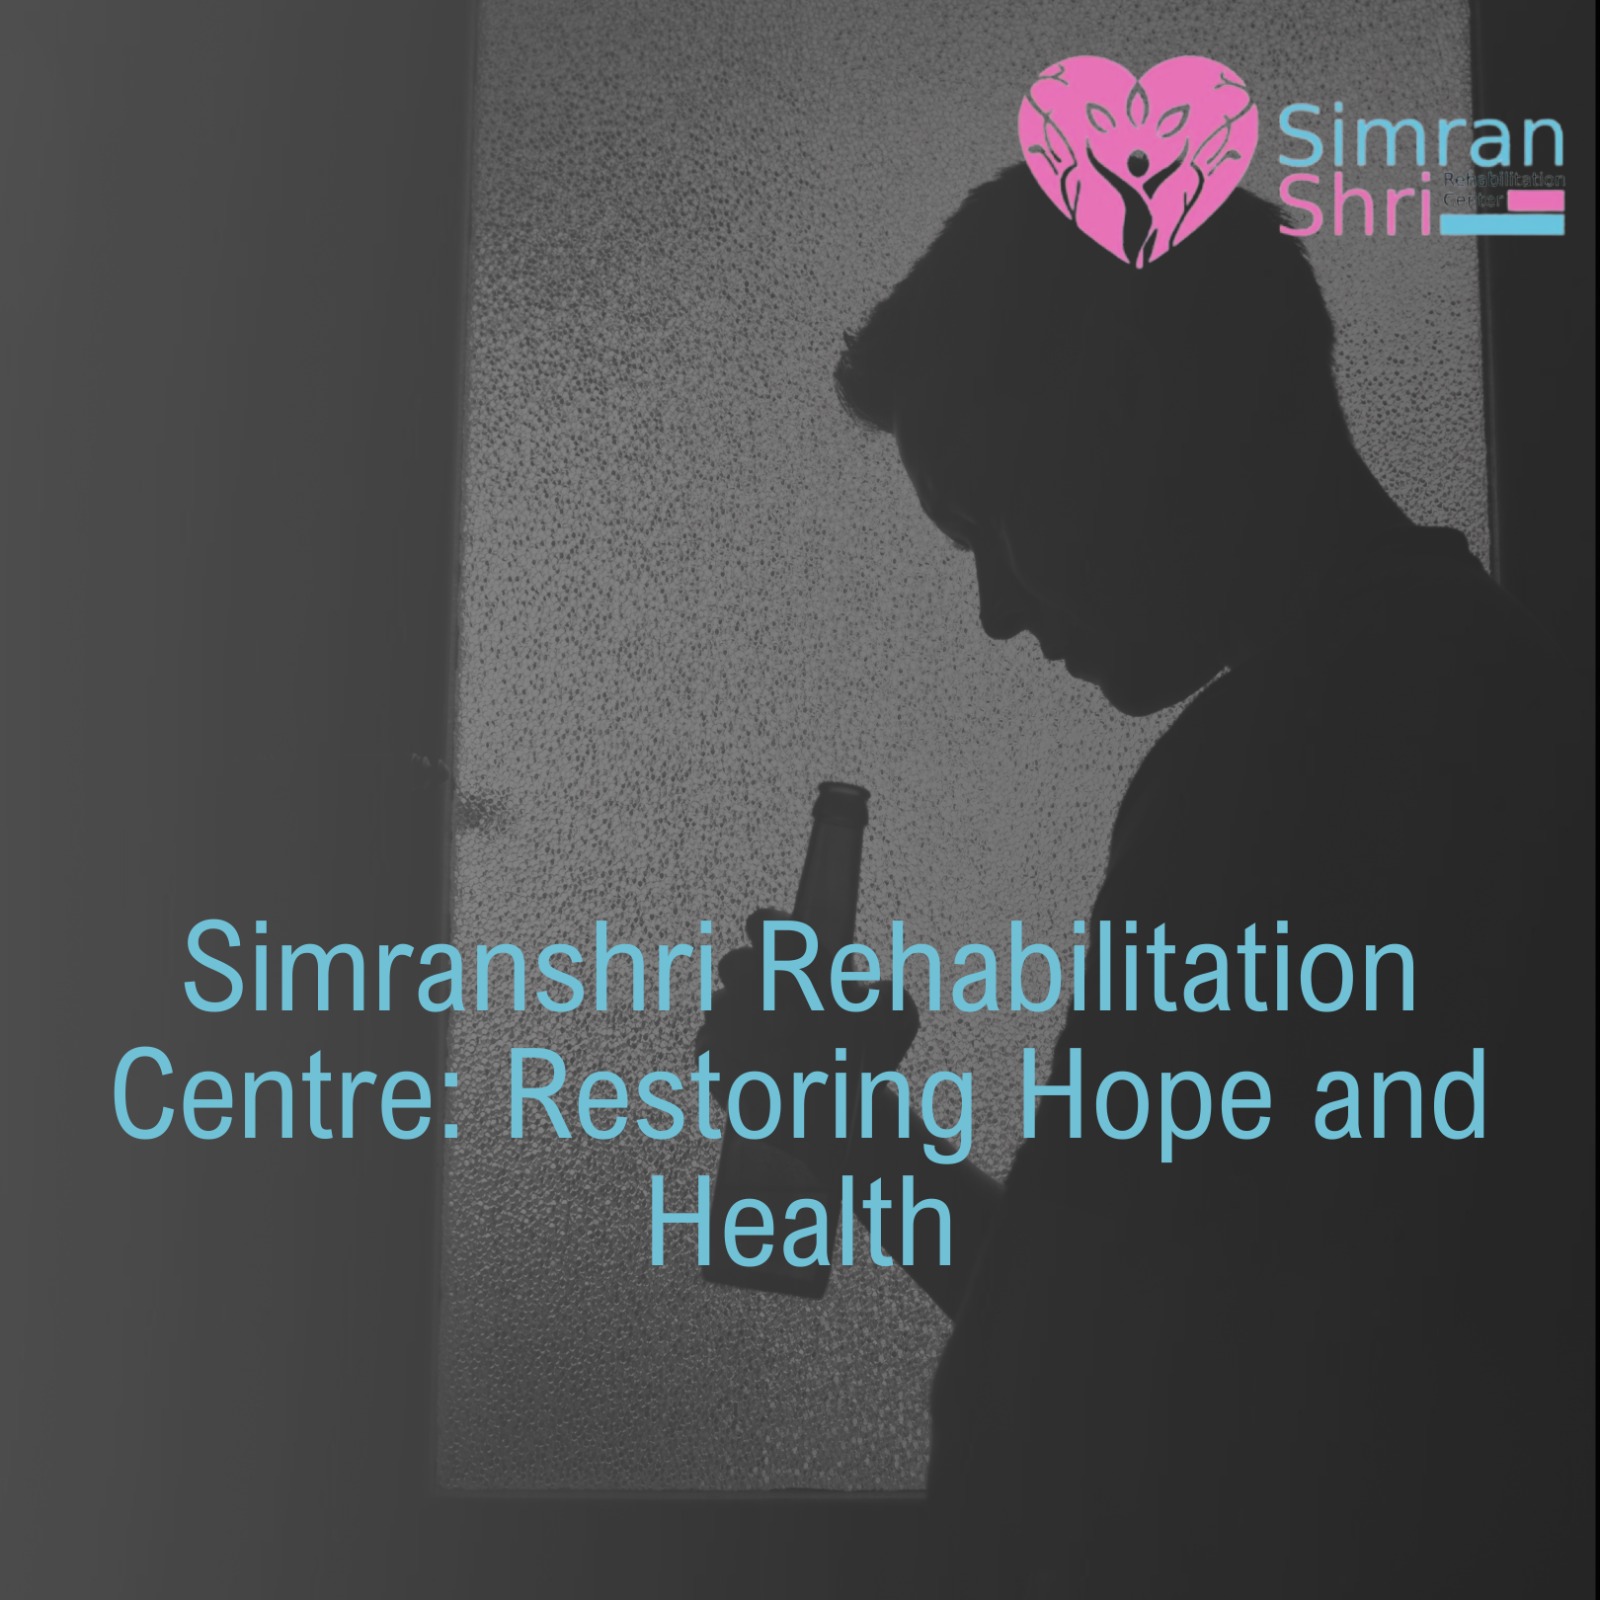 Simranshri Rehabilitation Centre: Restoring Hope and Health